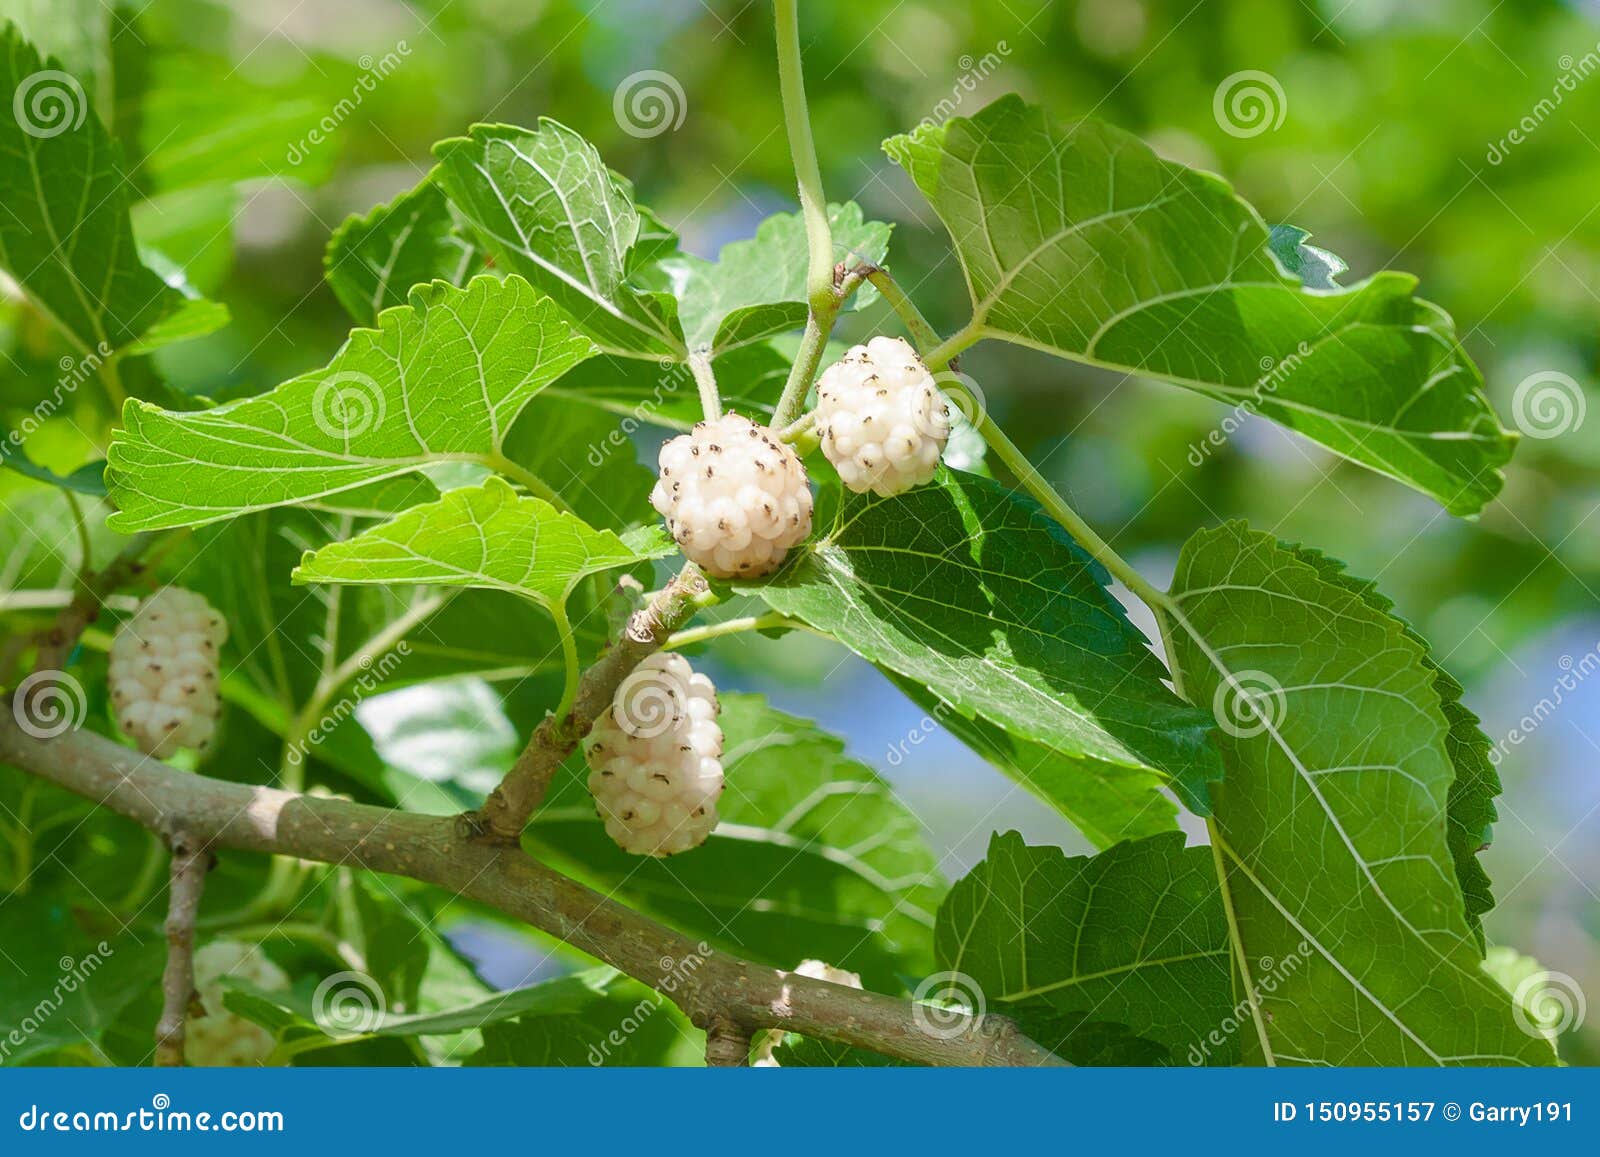 mulberry morus alba are on tree